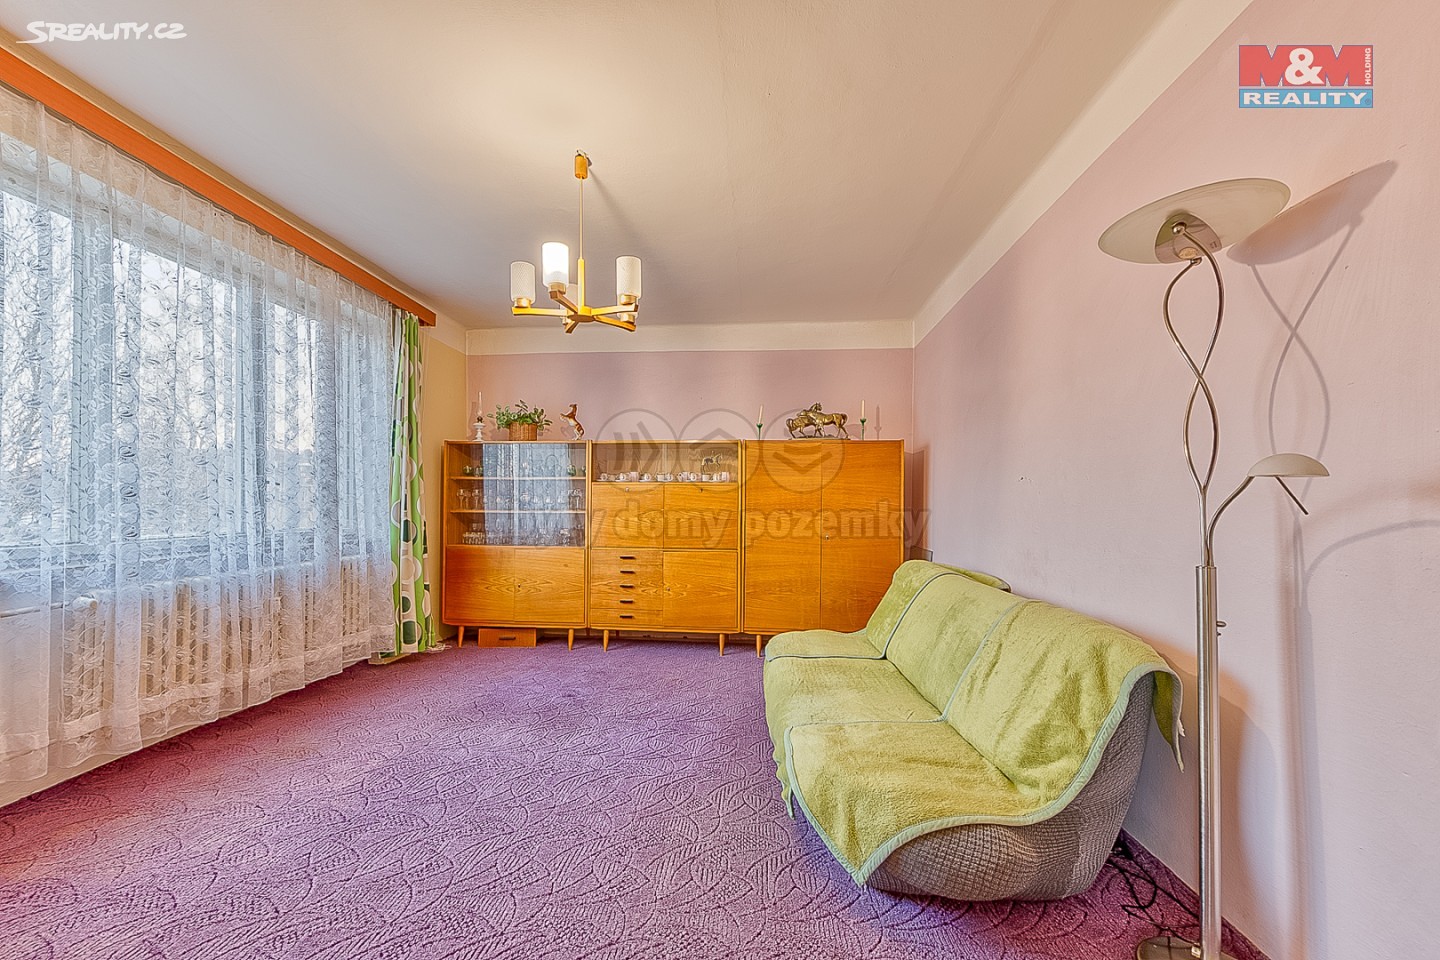 Prodej bytu 3+1 69 m², Kladruby nad Labem, okres Pardubice